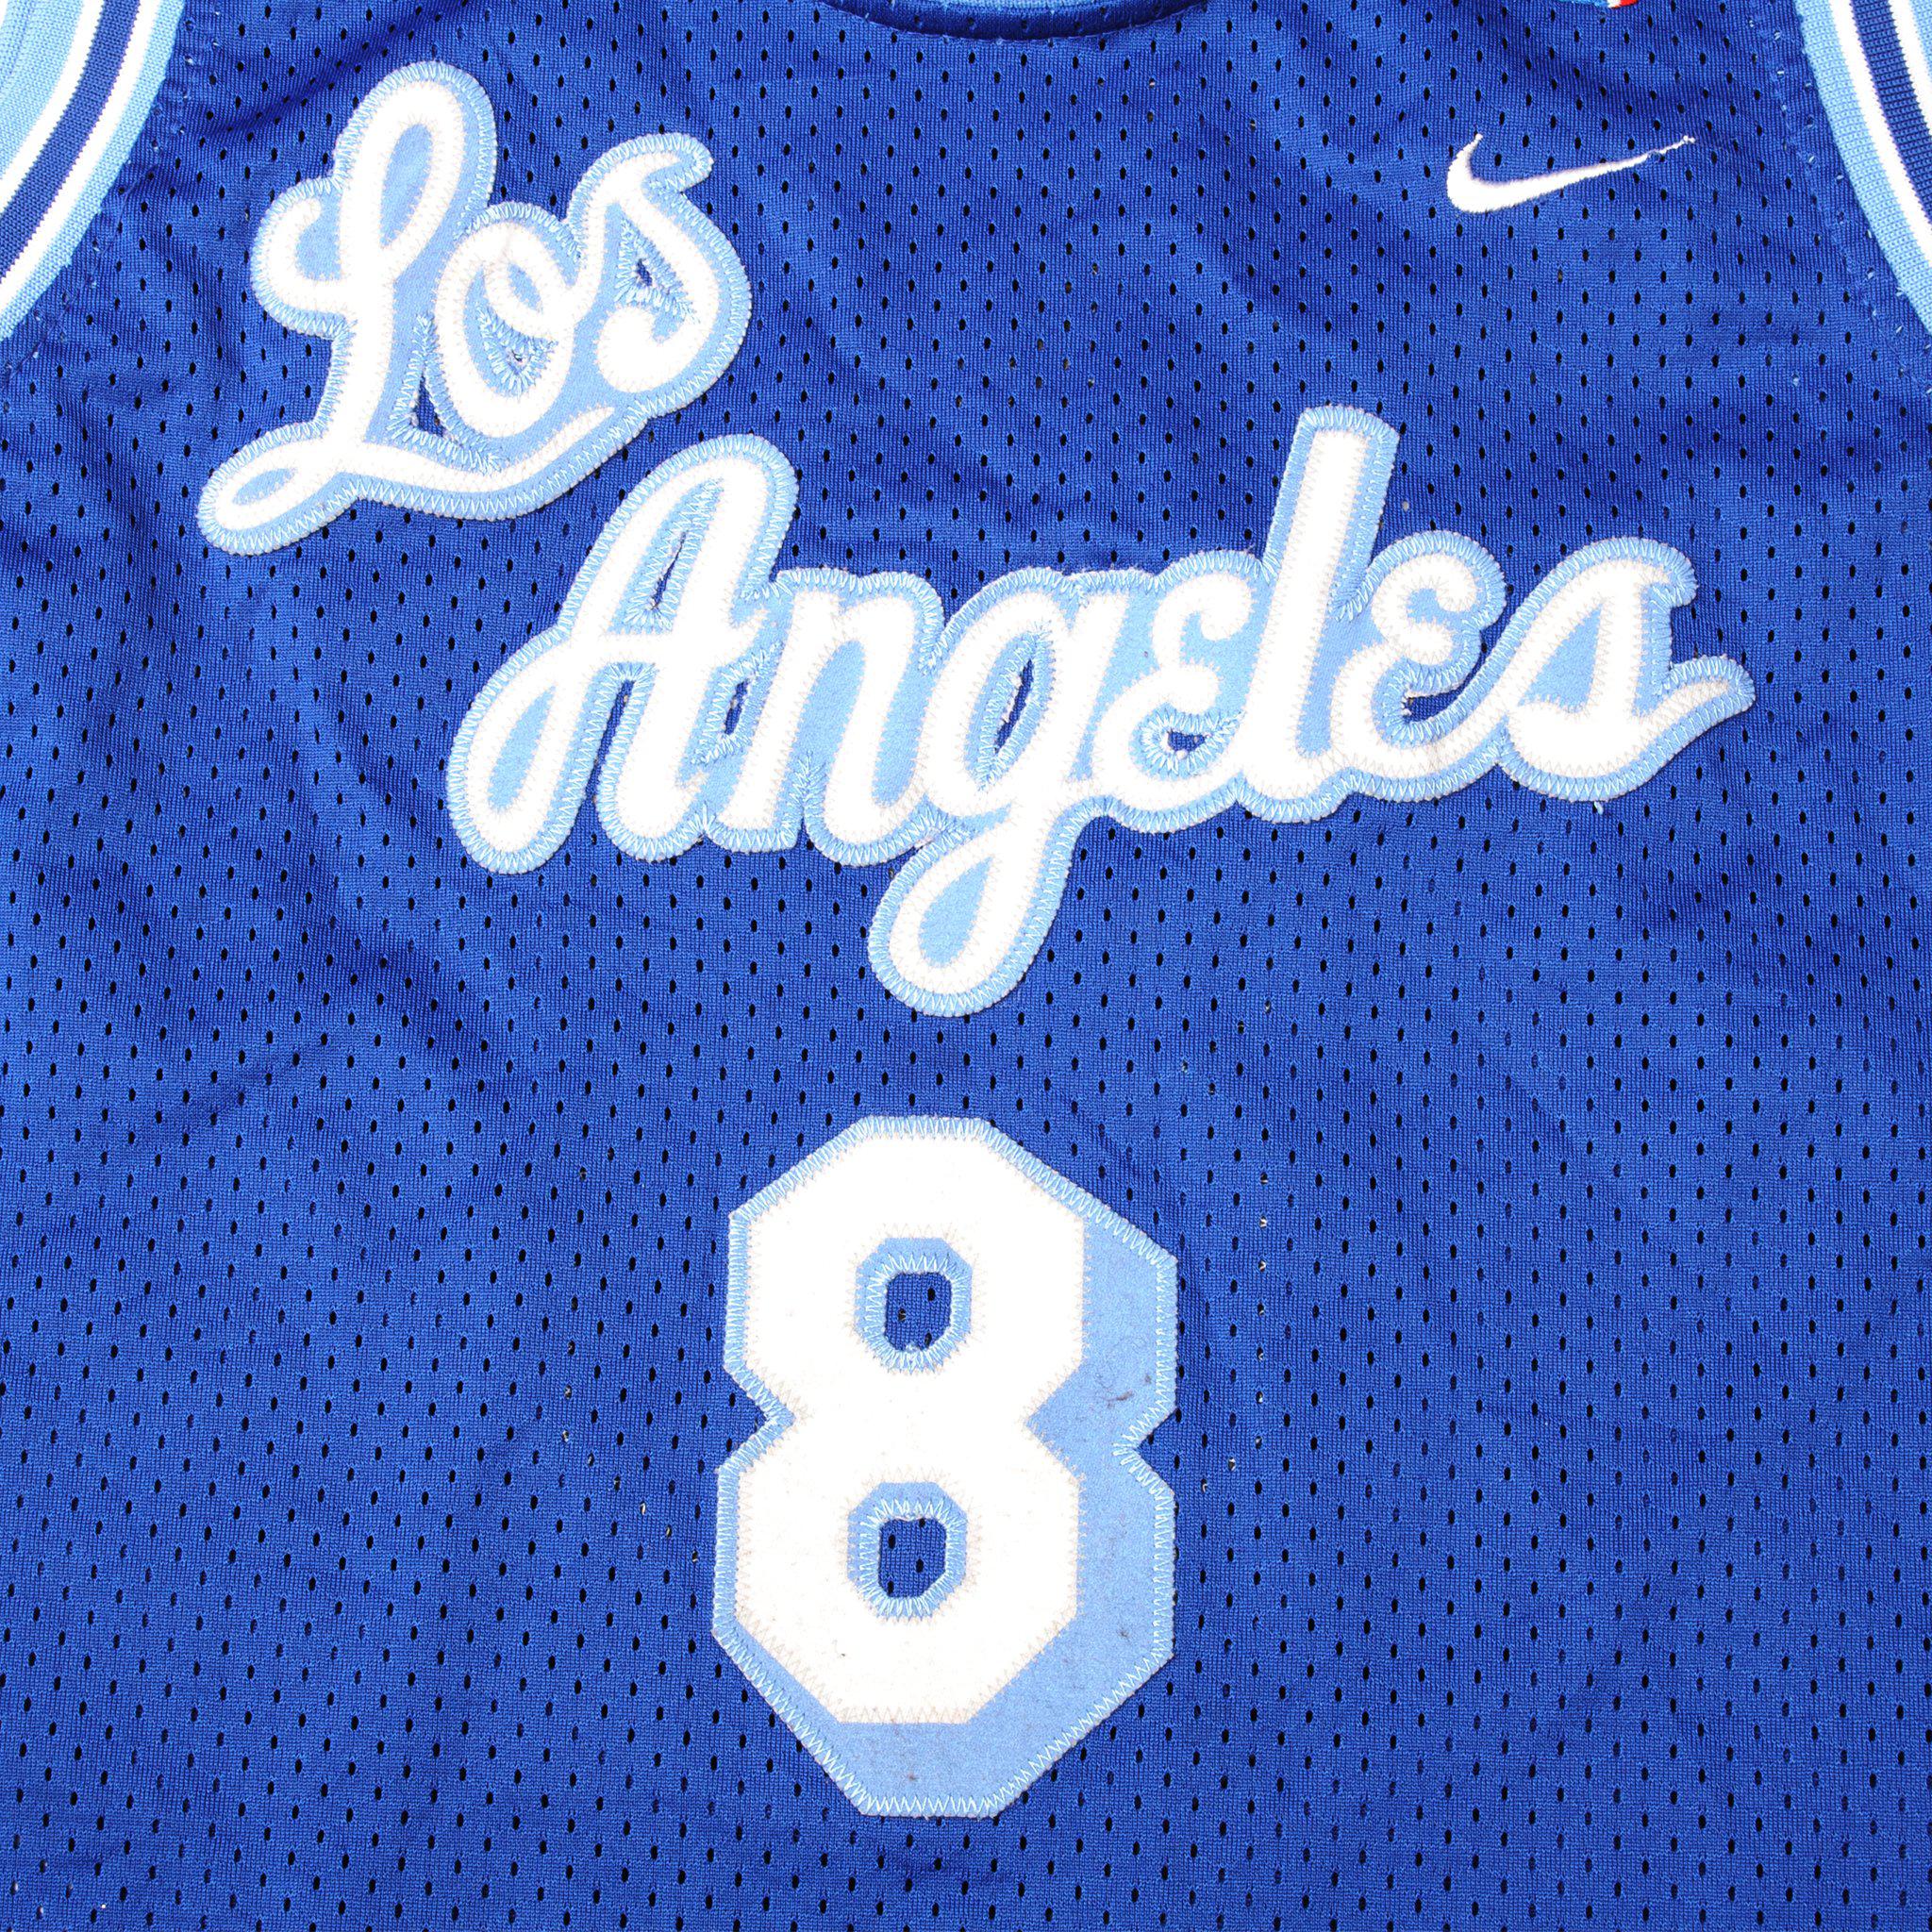 VTG Nike NBA Los Angeles Lakers Kobe Bryant Blue Jersey – Yesterday's Fits